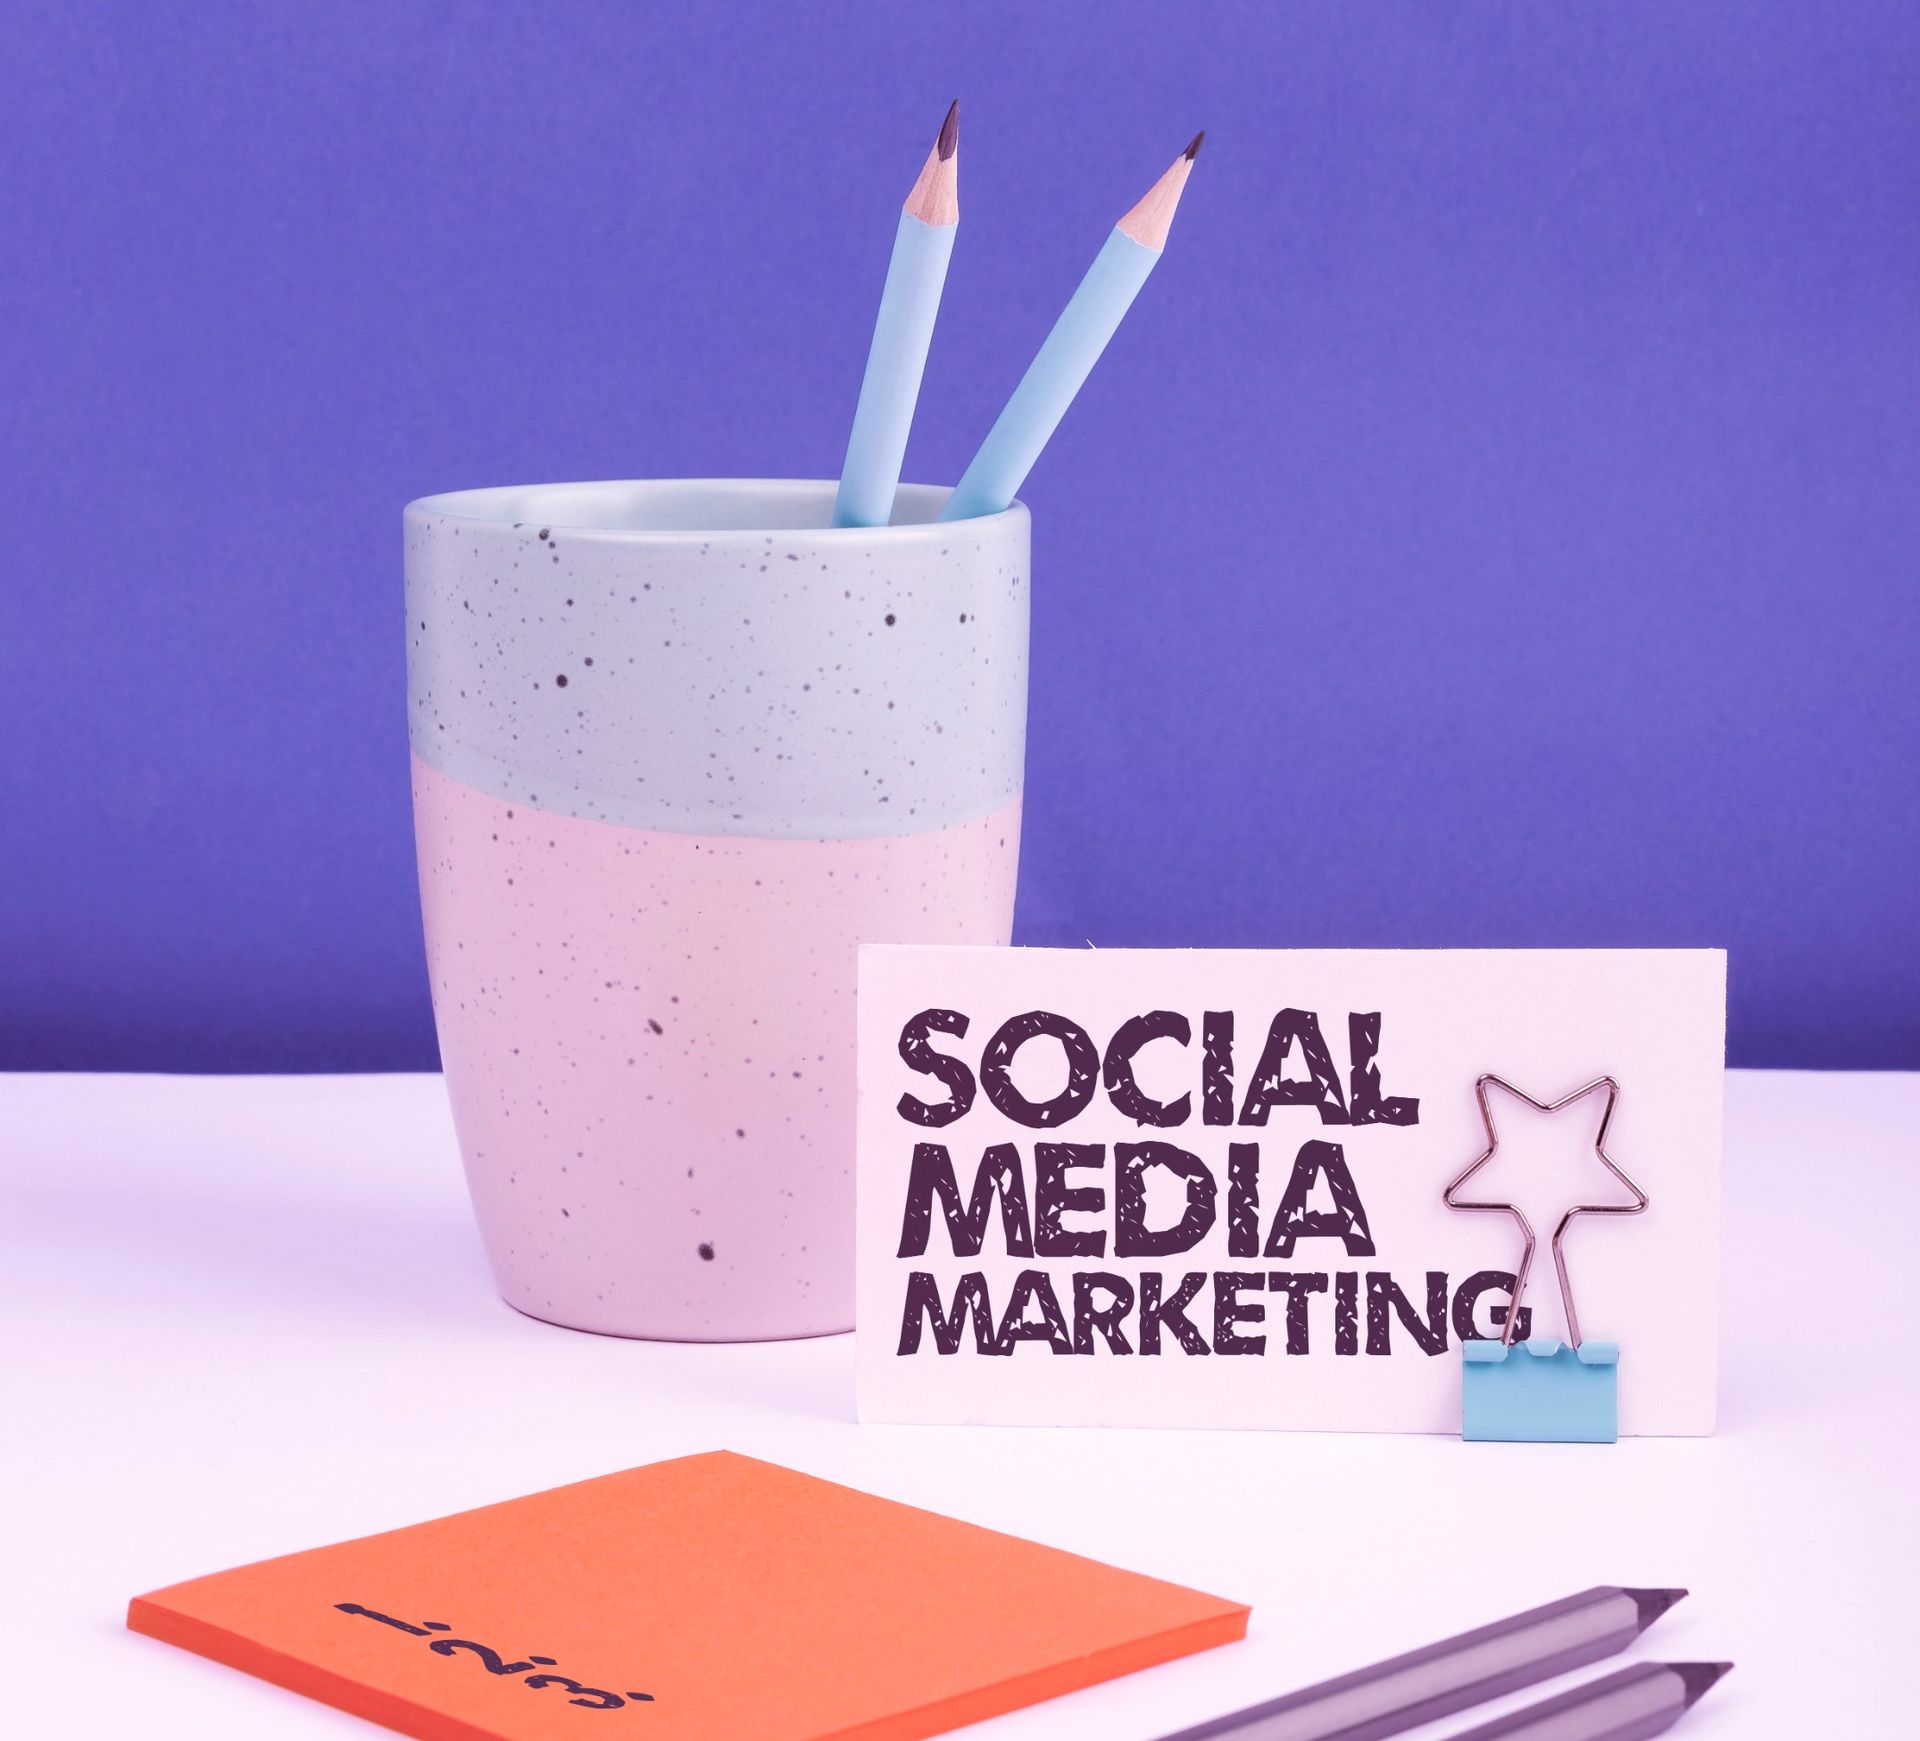 How to Do Social Media Marketing for Small Business